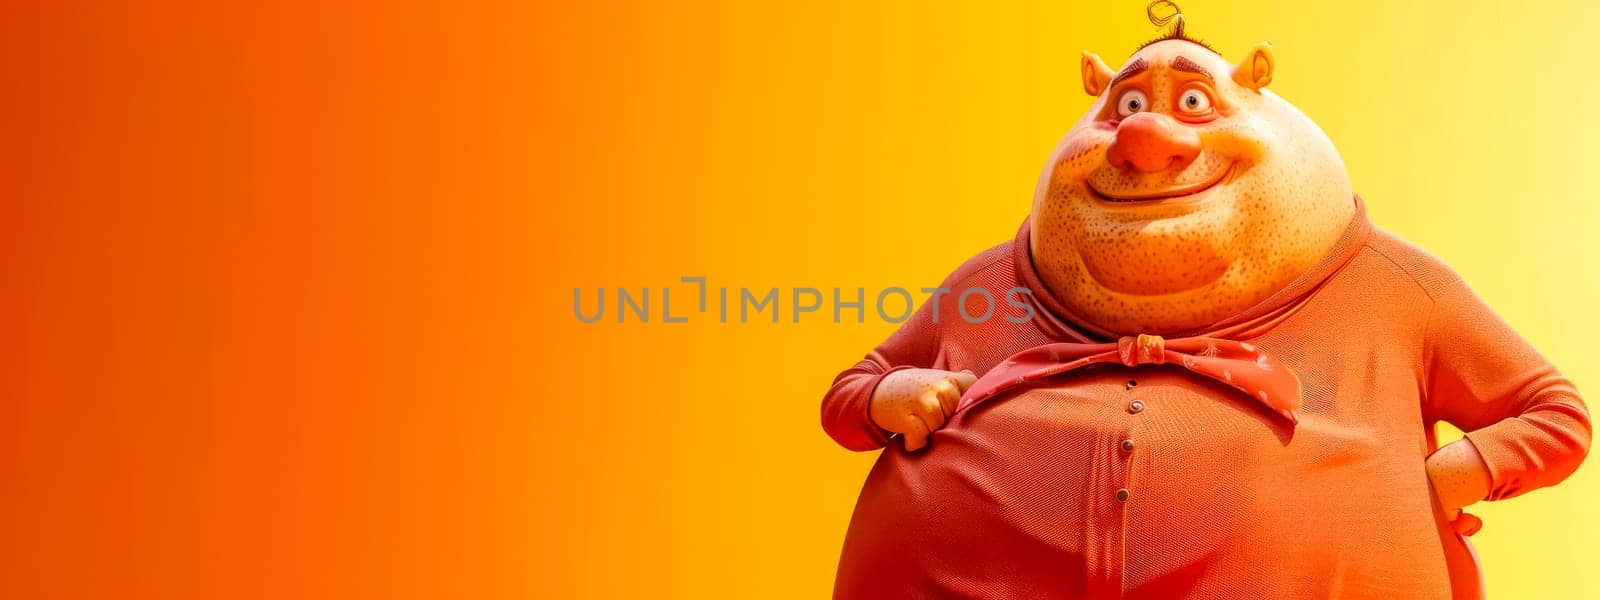 Cheerful animated character on orange background by Edophoto